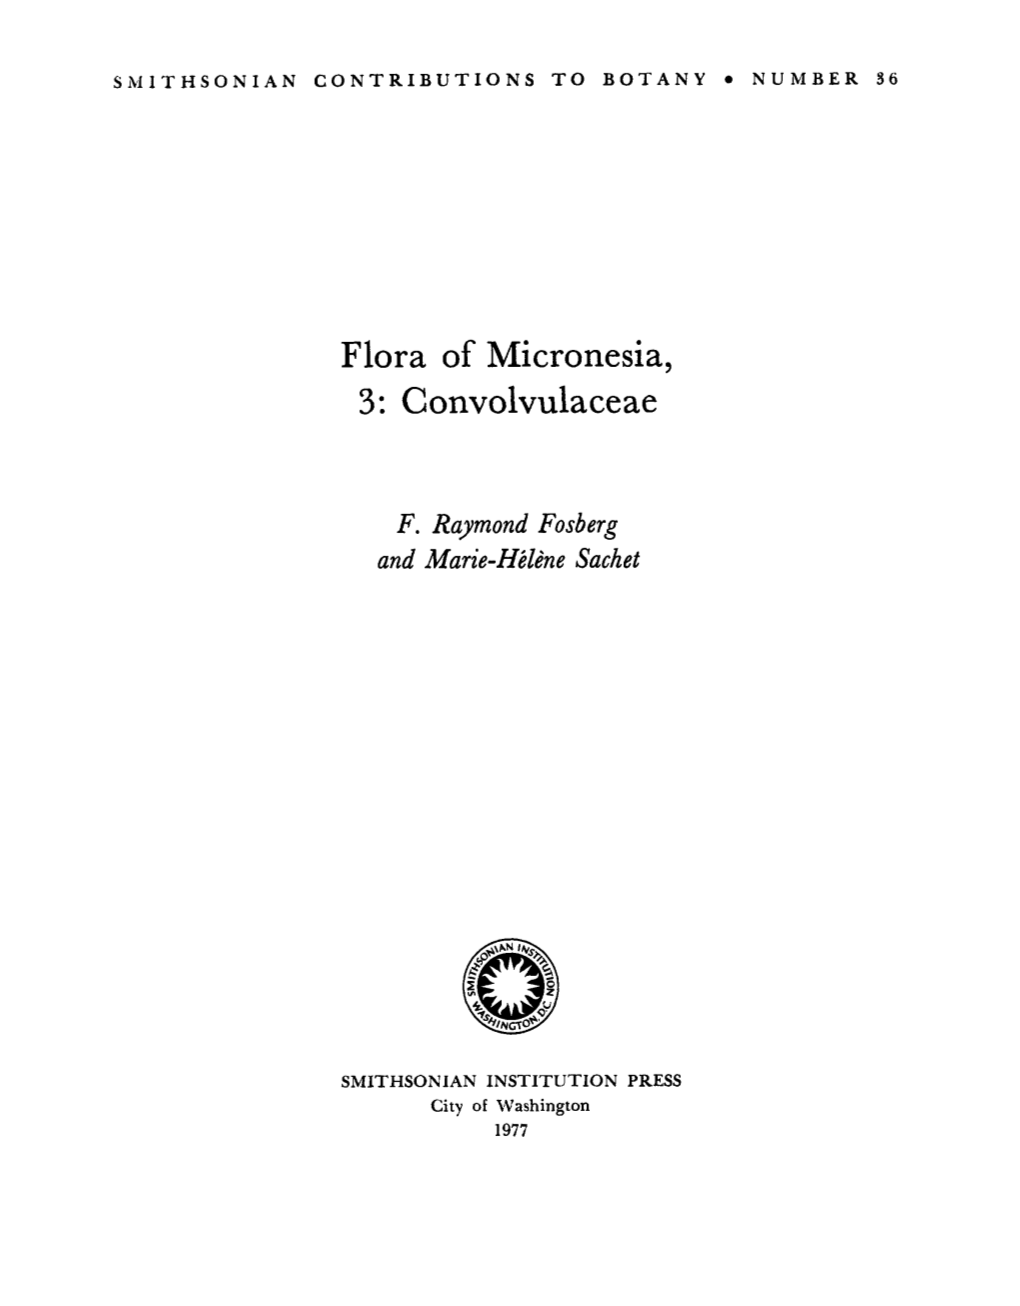 Flora of Micronesia, 3: Convolvulaceae